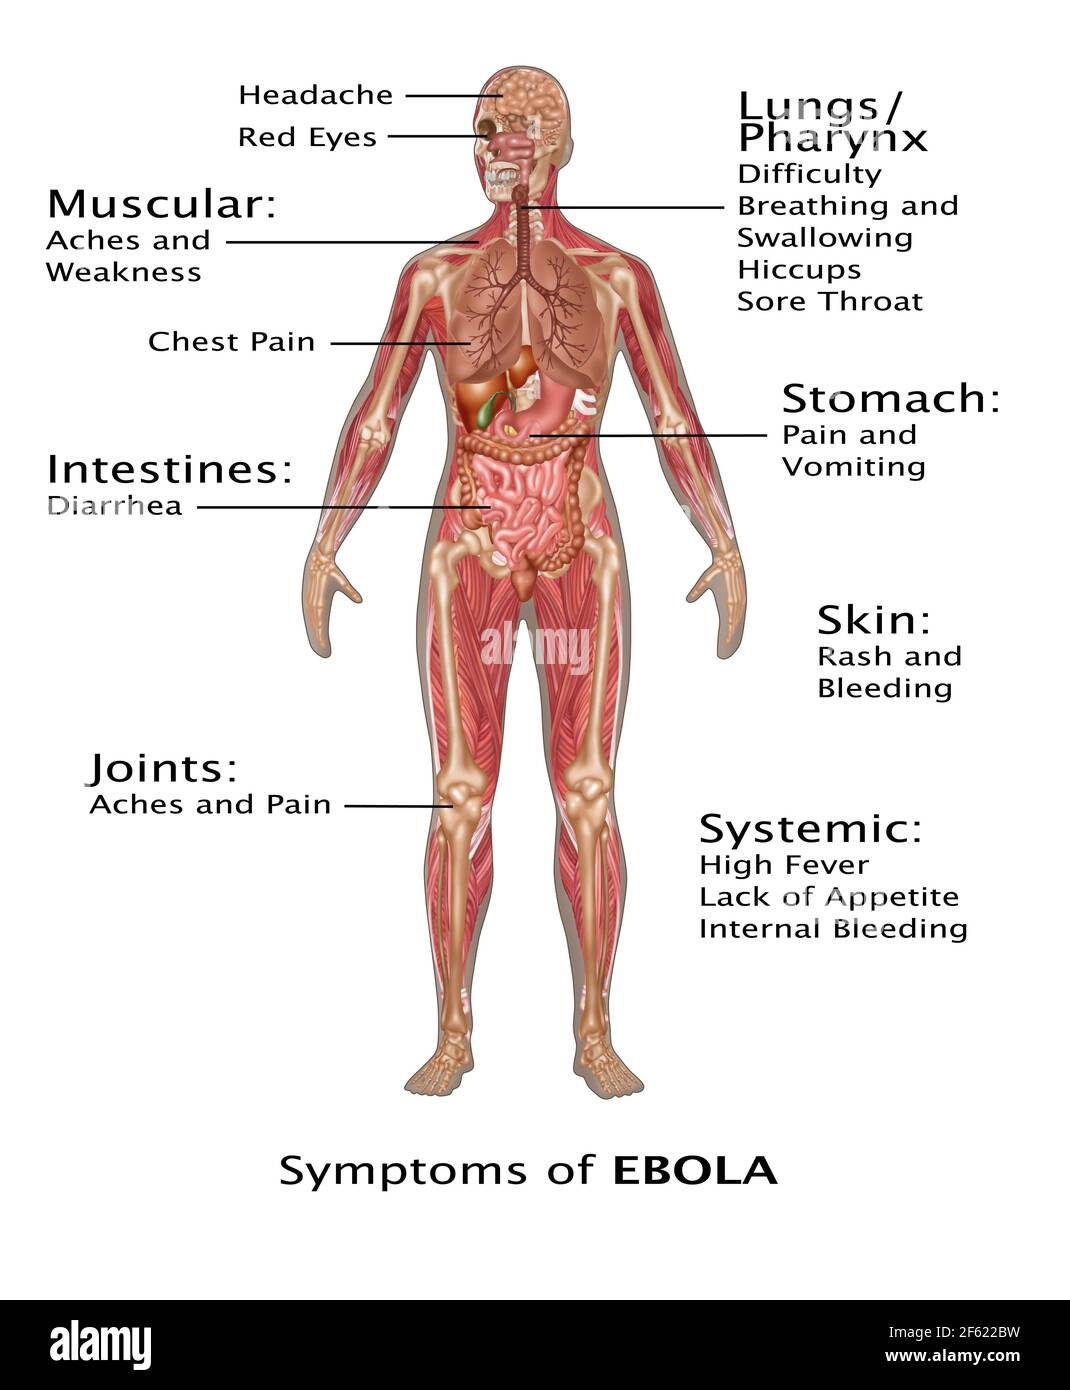 Ebola Virus Symptoms in Human, Illustration Stock Photo